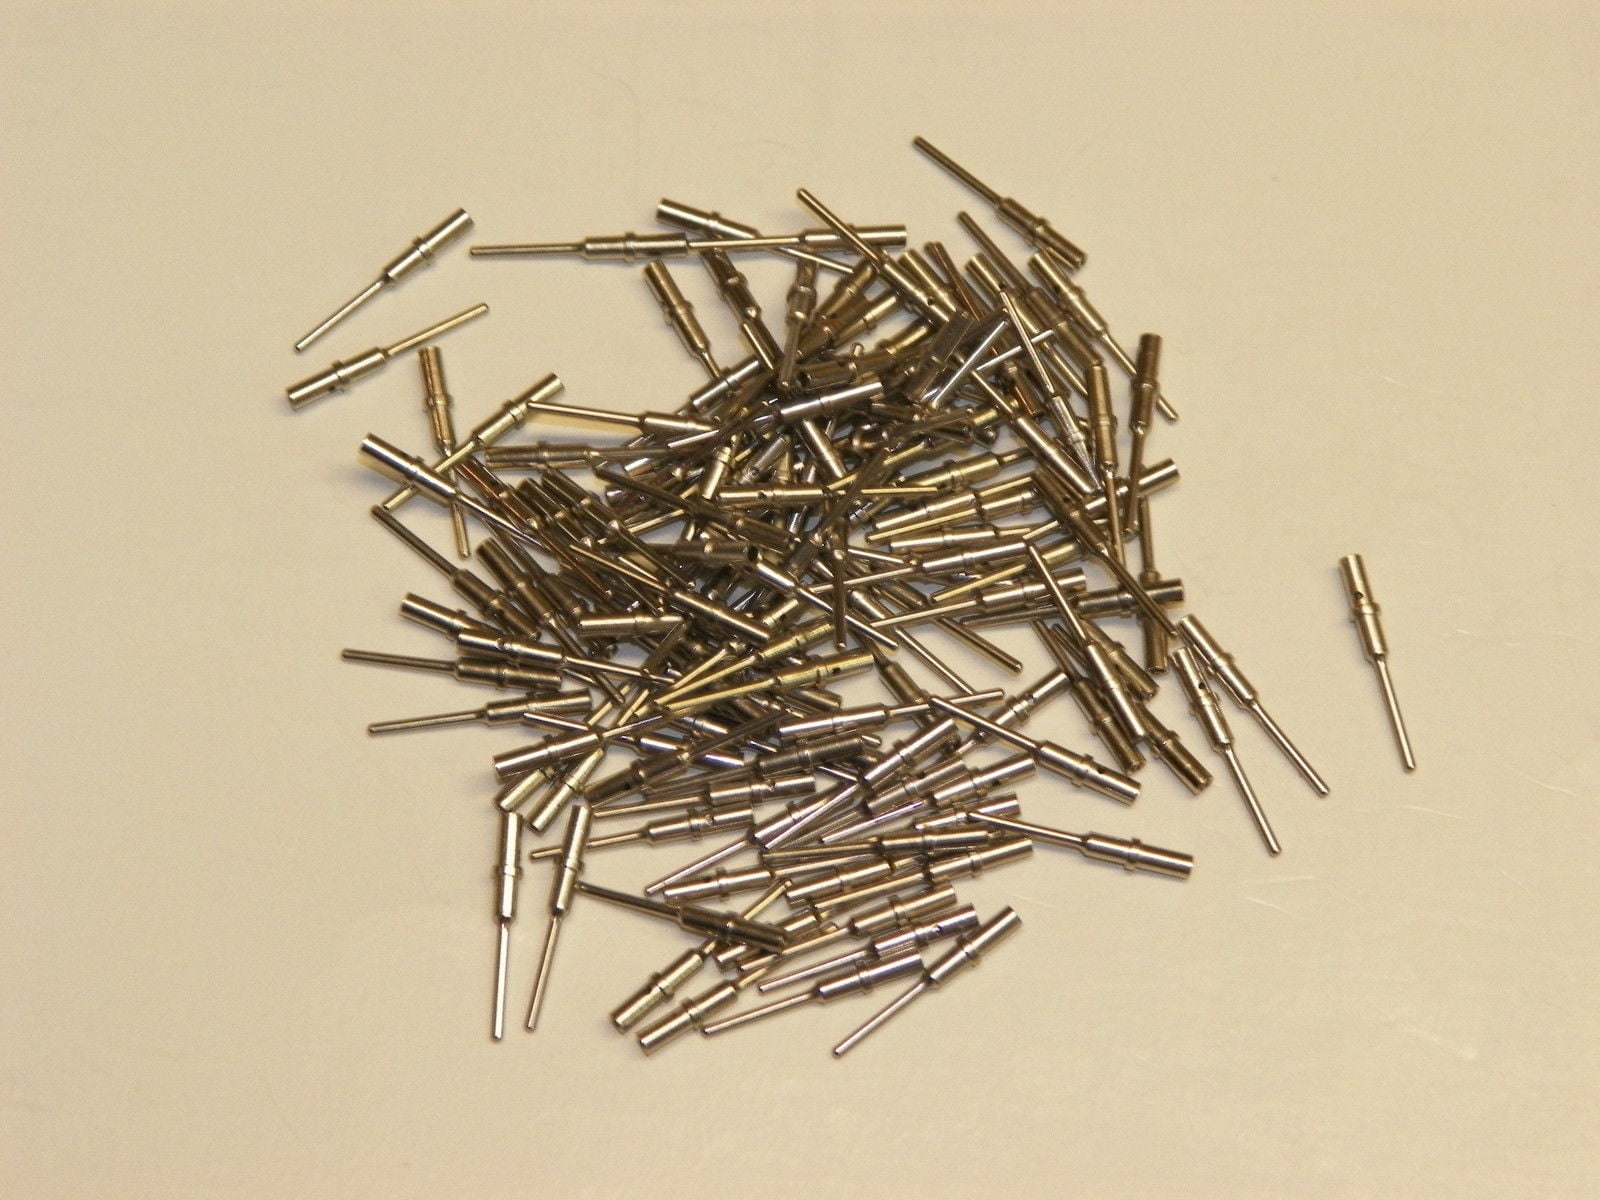 100 Deutsch DT #16 Solid Contact Terminals male pins for 16-18-20 gauge wire